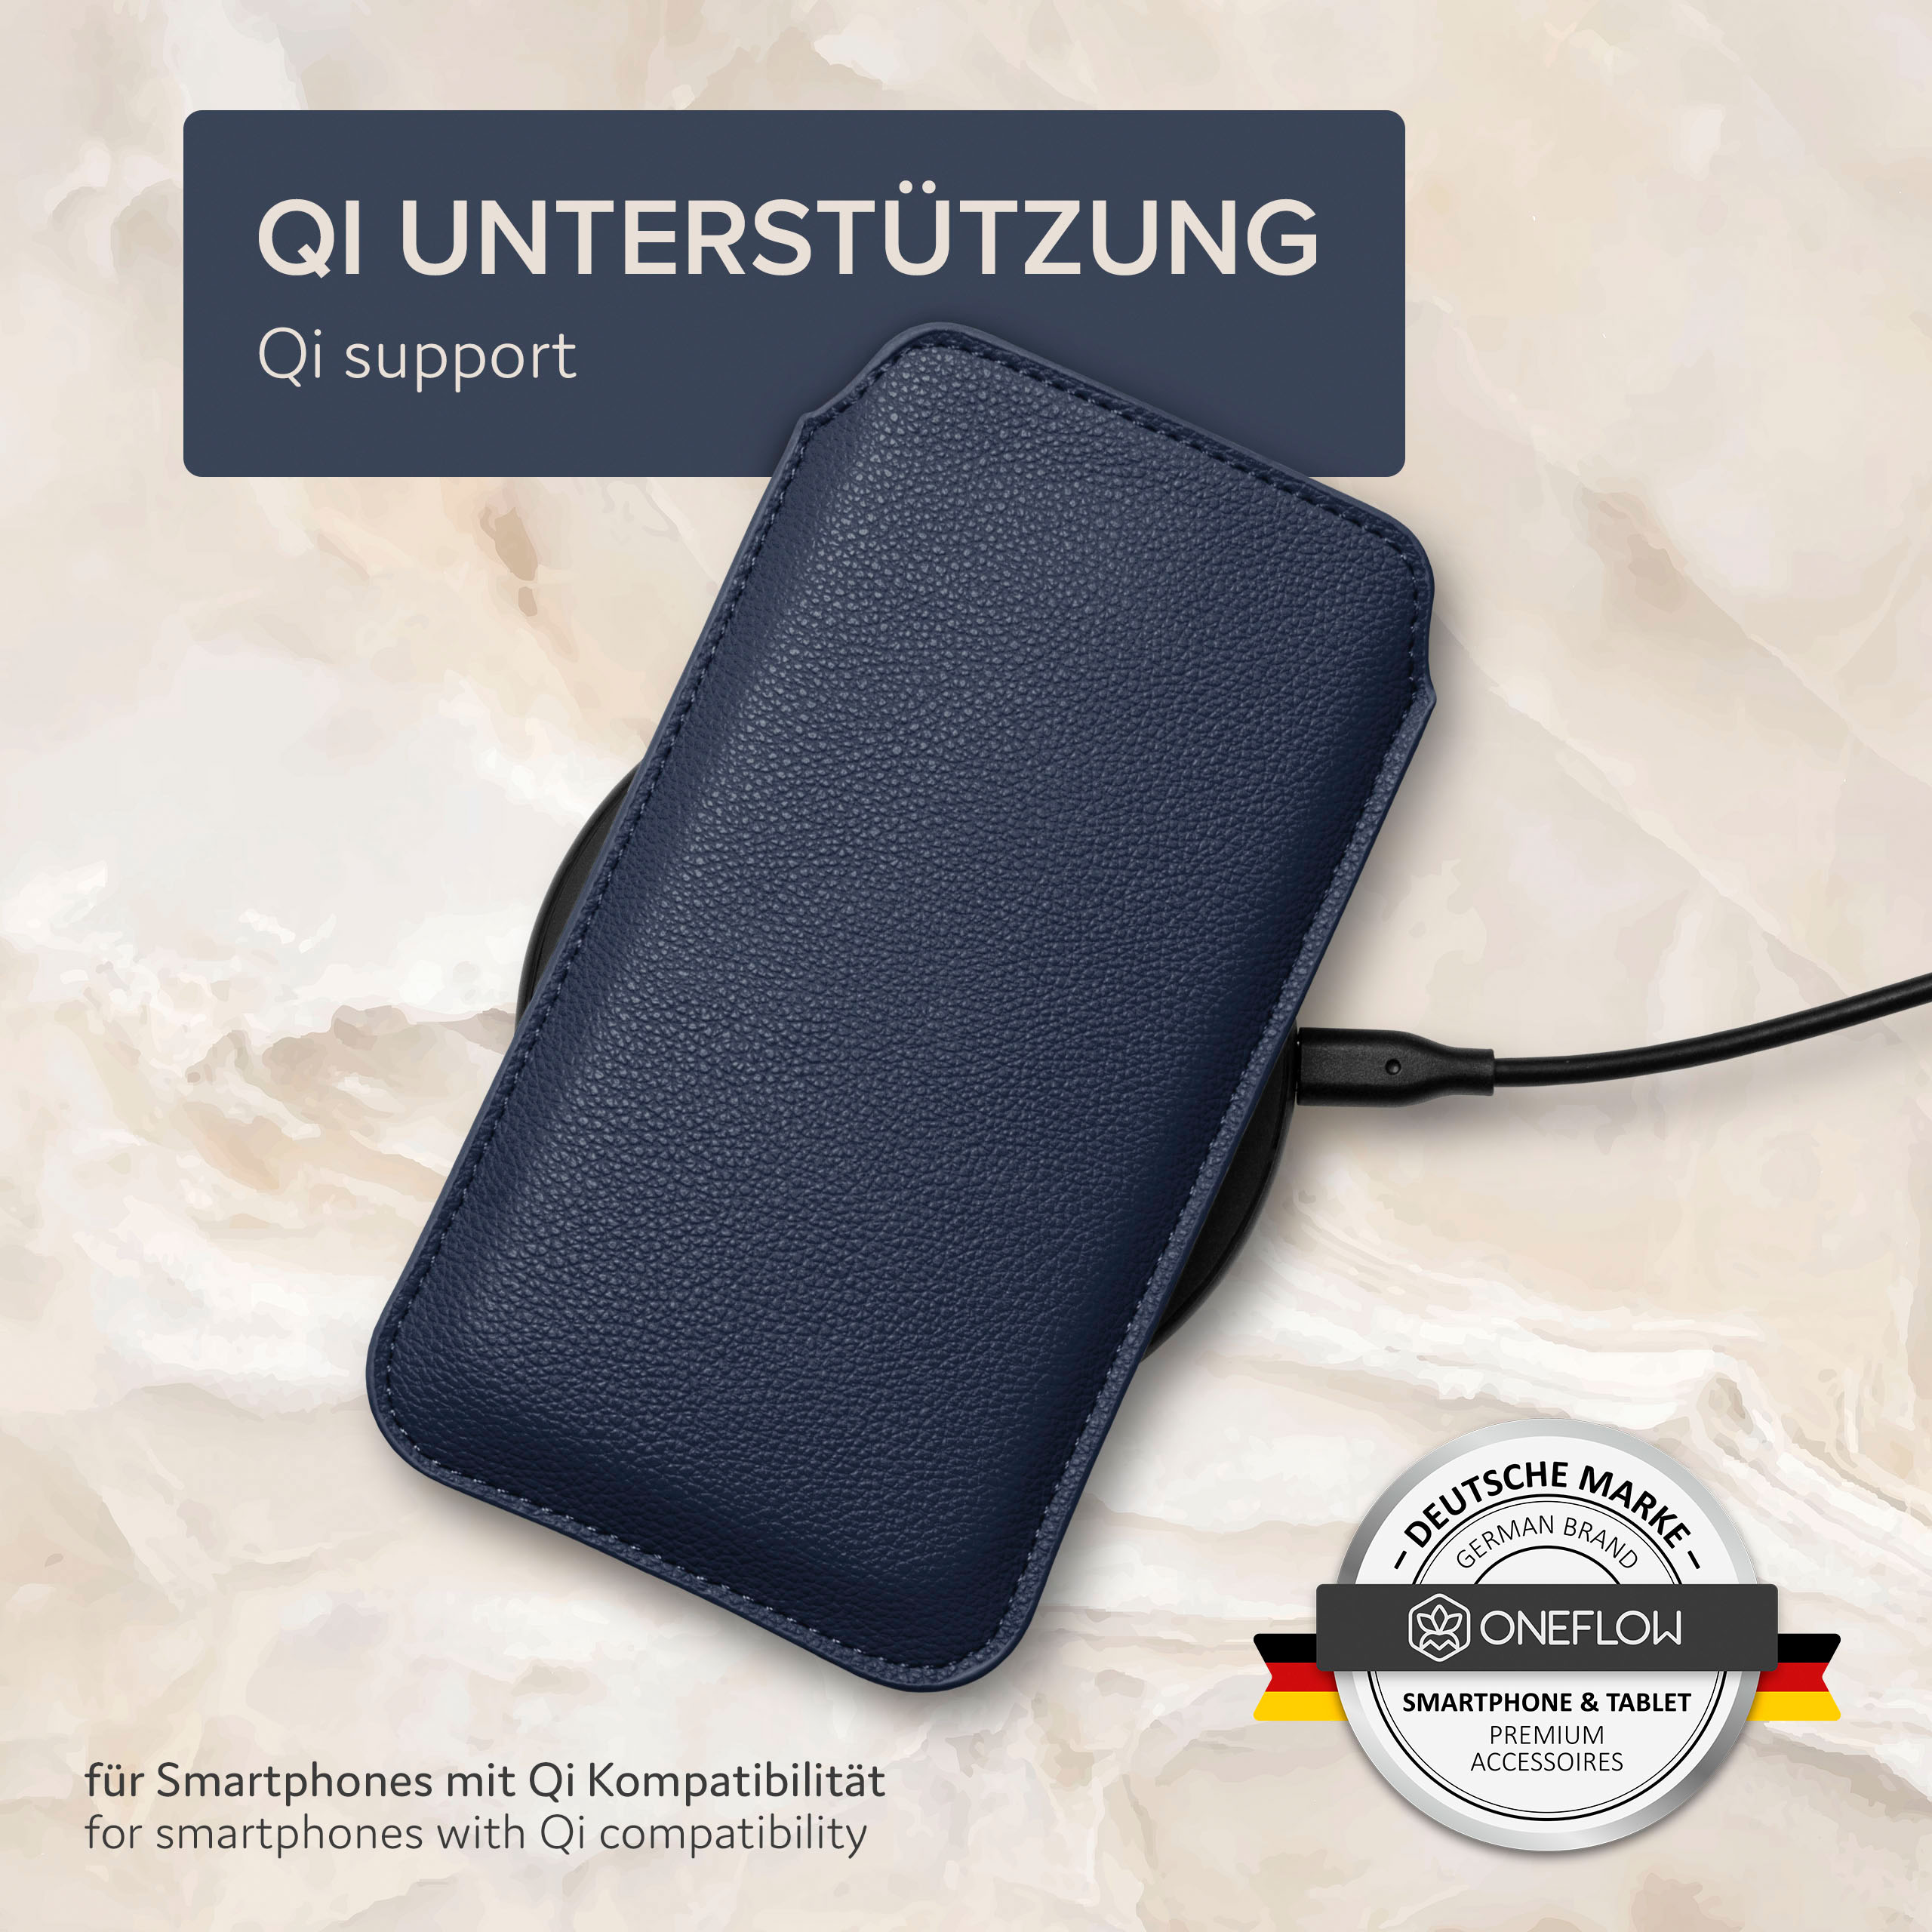 Cover, Sony, Dunkelblau Full Xperia Einsteckhülle mit Z1 Zuglasche, ONEFLOW Compact,